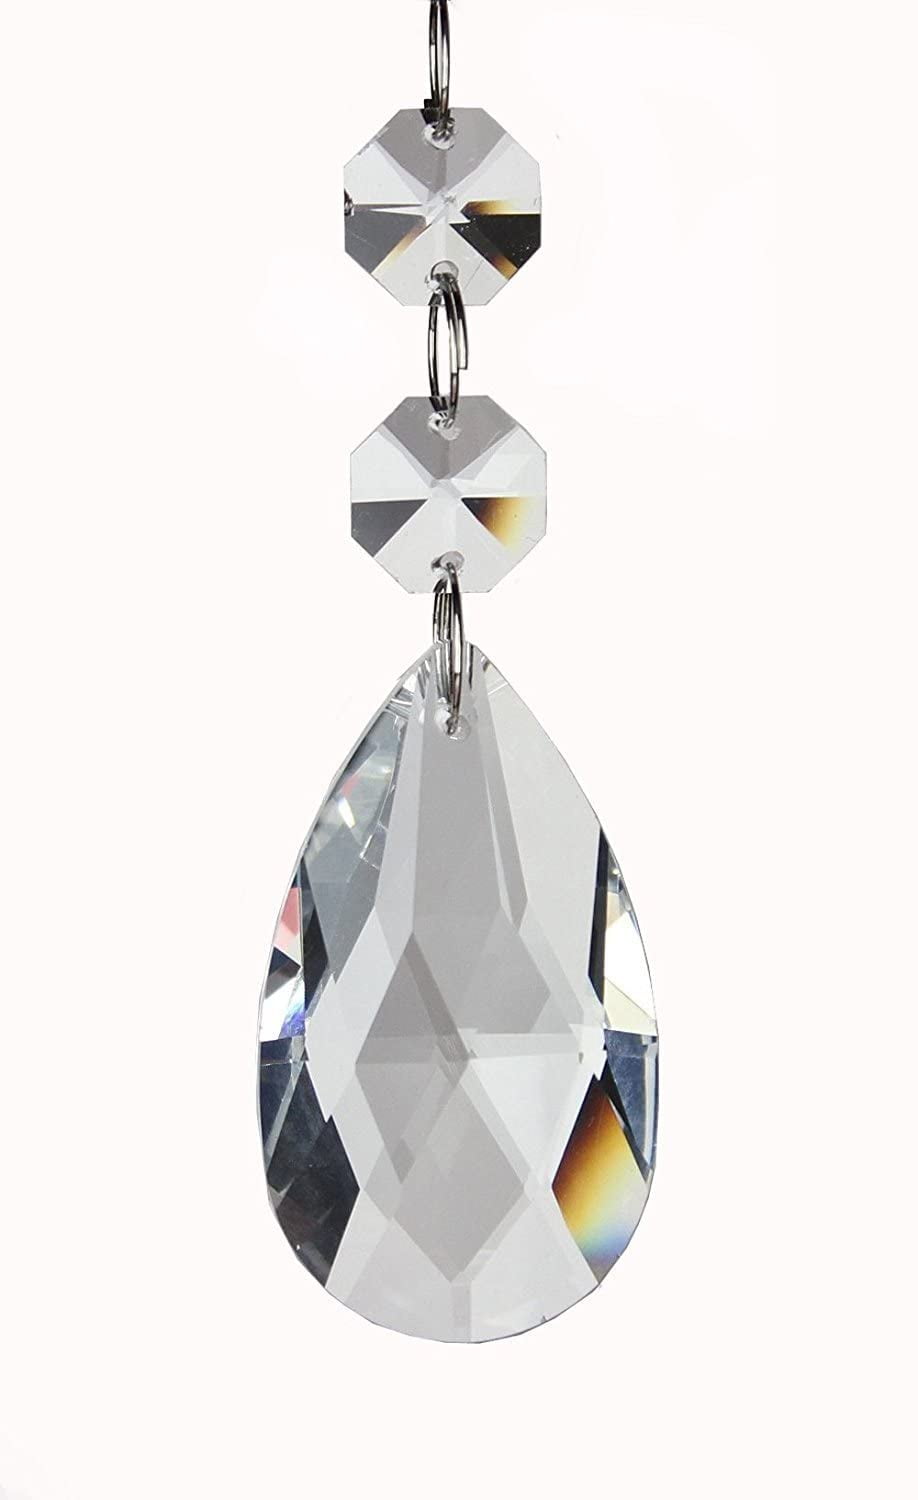 10x 3.3FT Hanging Acrylic Crystal Bead Triangle Strip Garland Wedding Decoration 